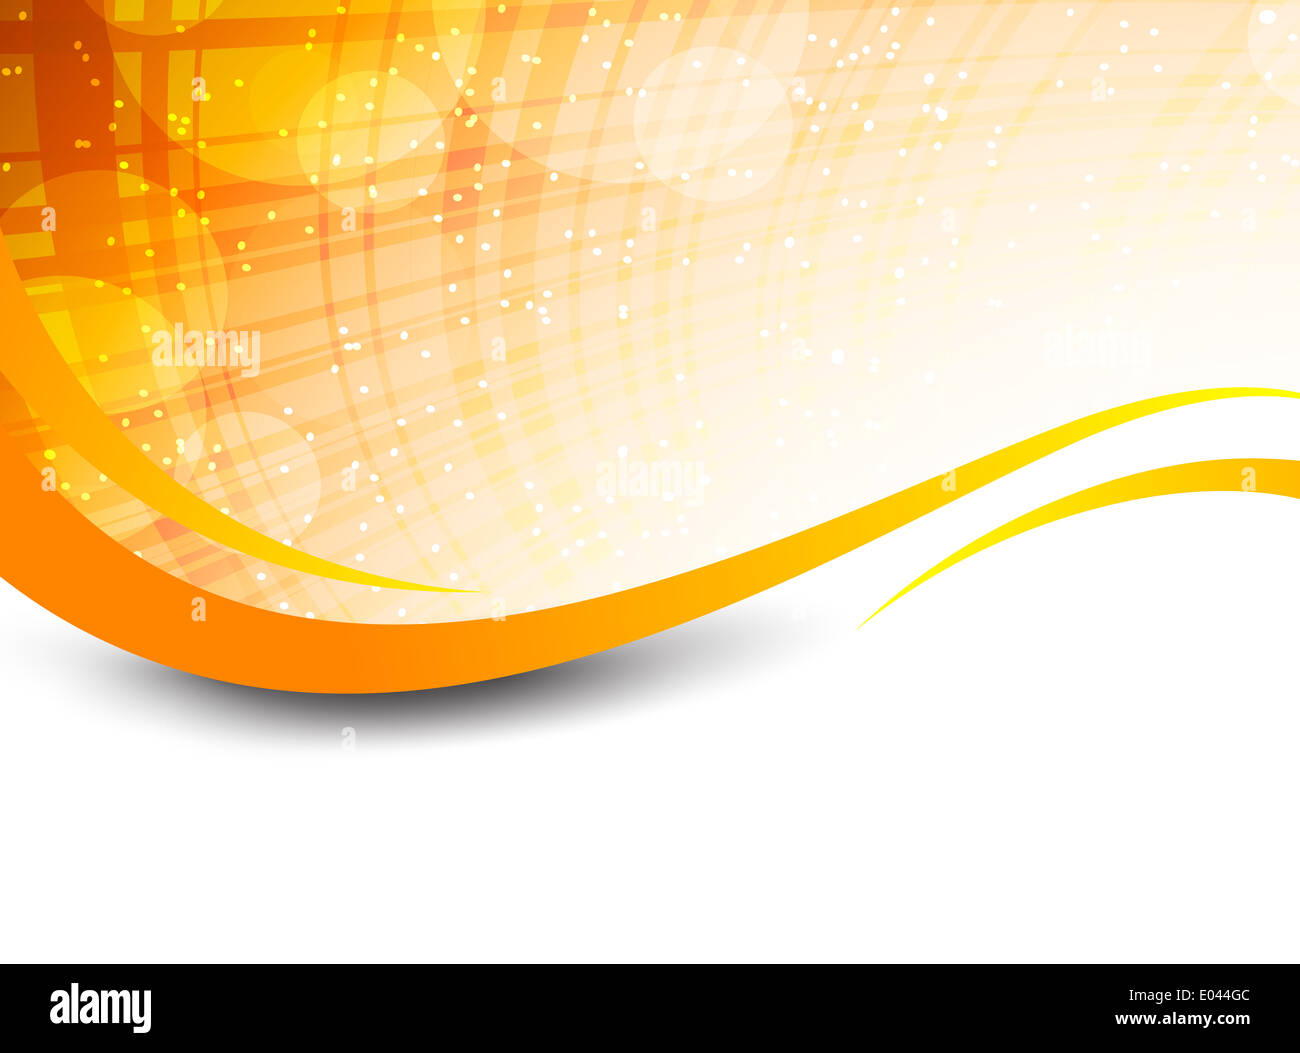 Wavy orange background with circles. Abstract illustration Stock Photo